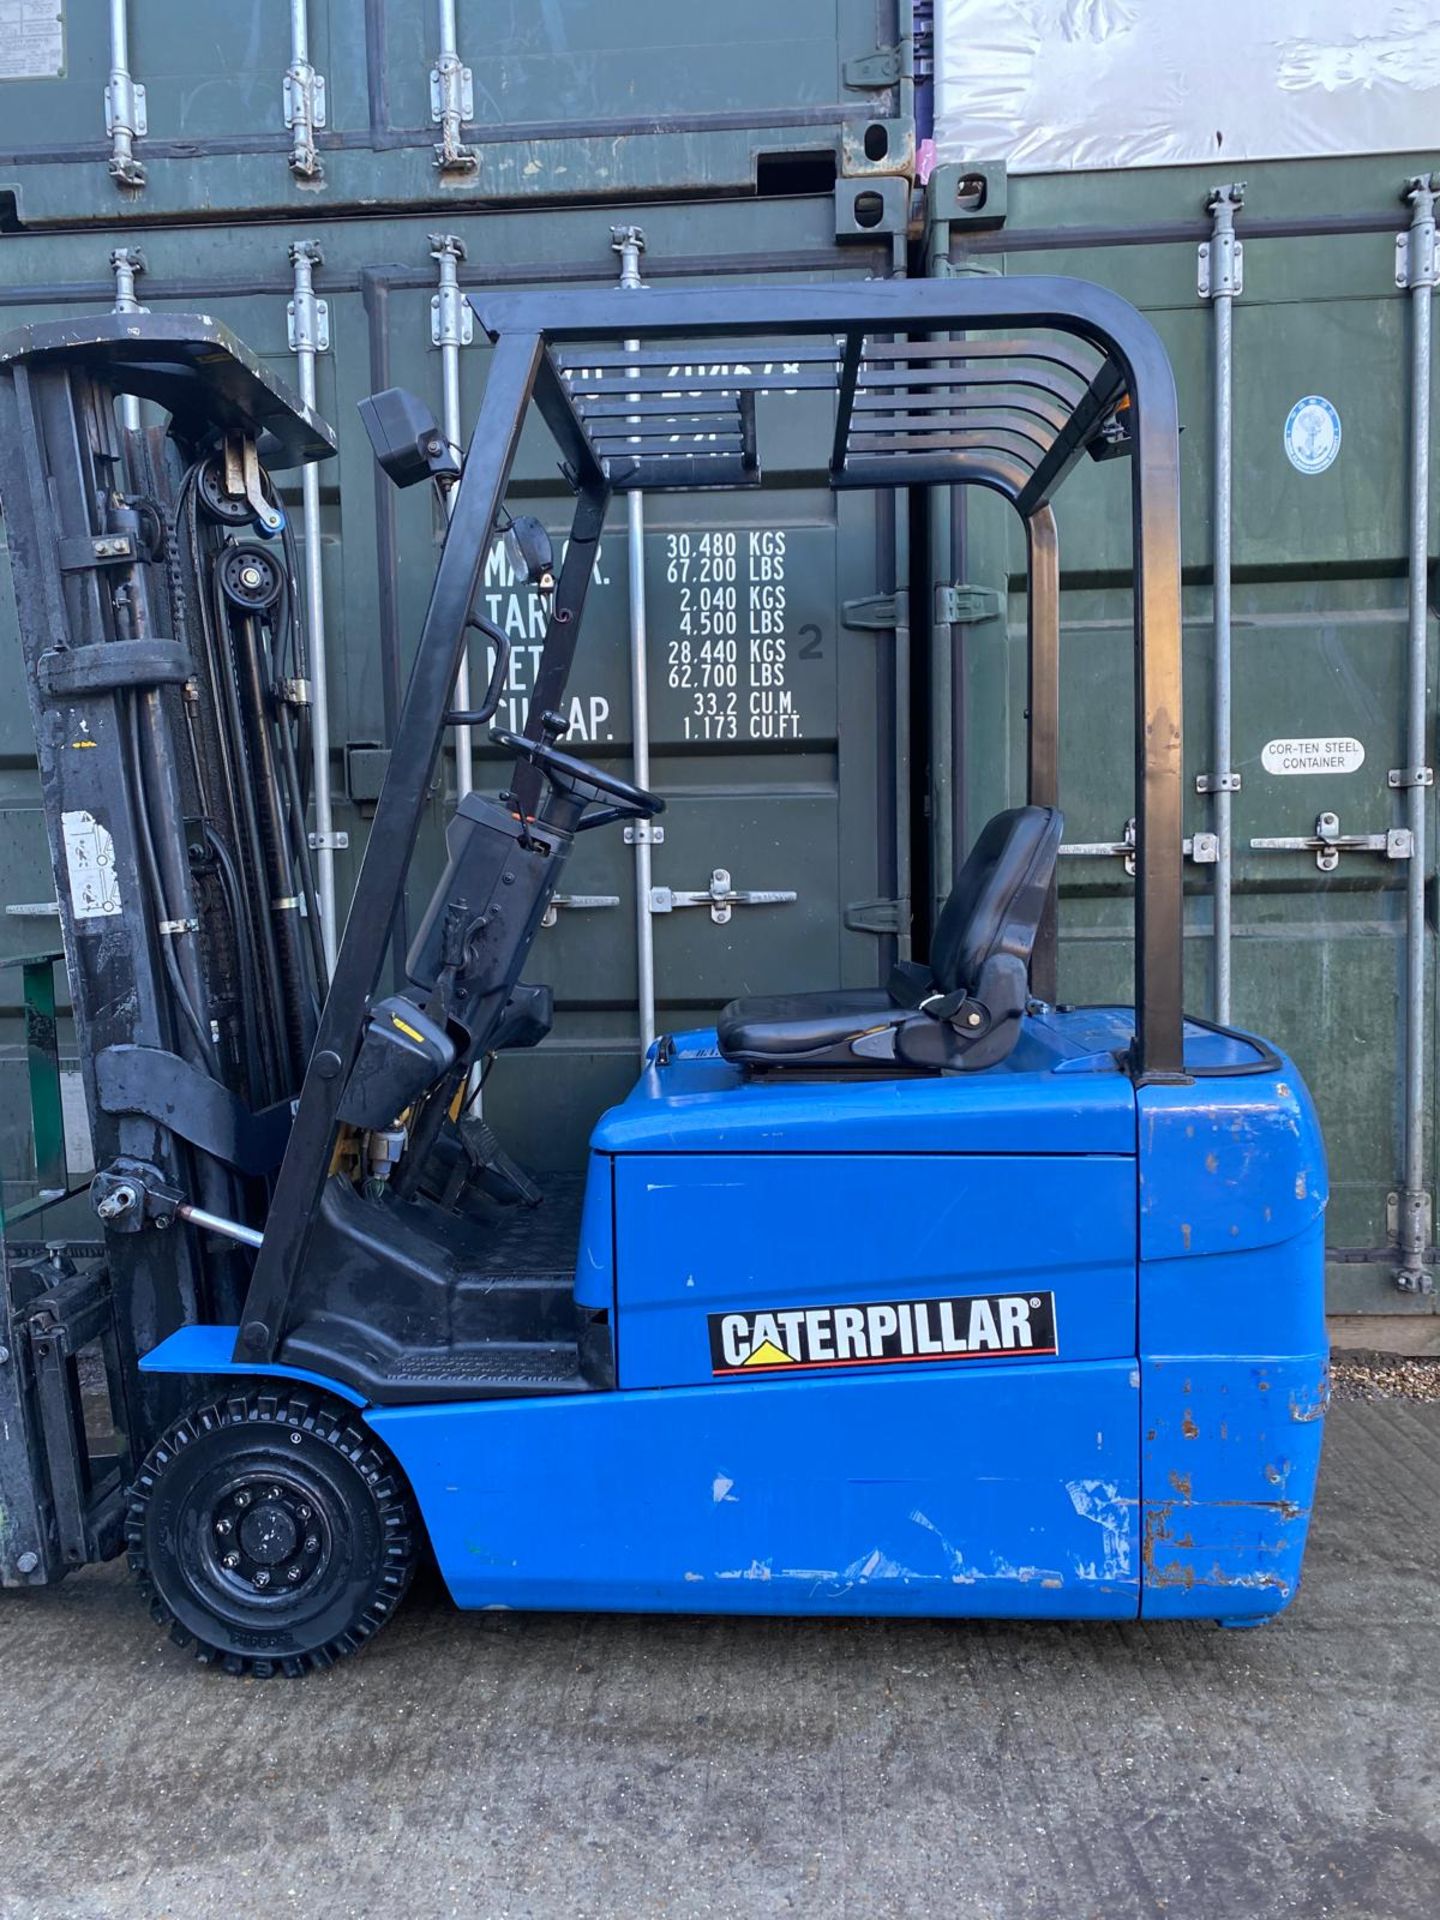 2002, Caterpillar 1.6 Ton Forklift - Image 8 of 10